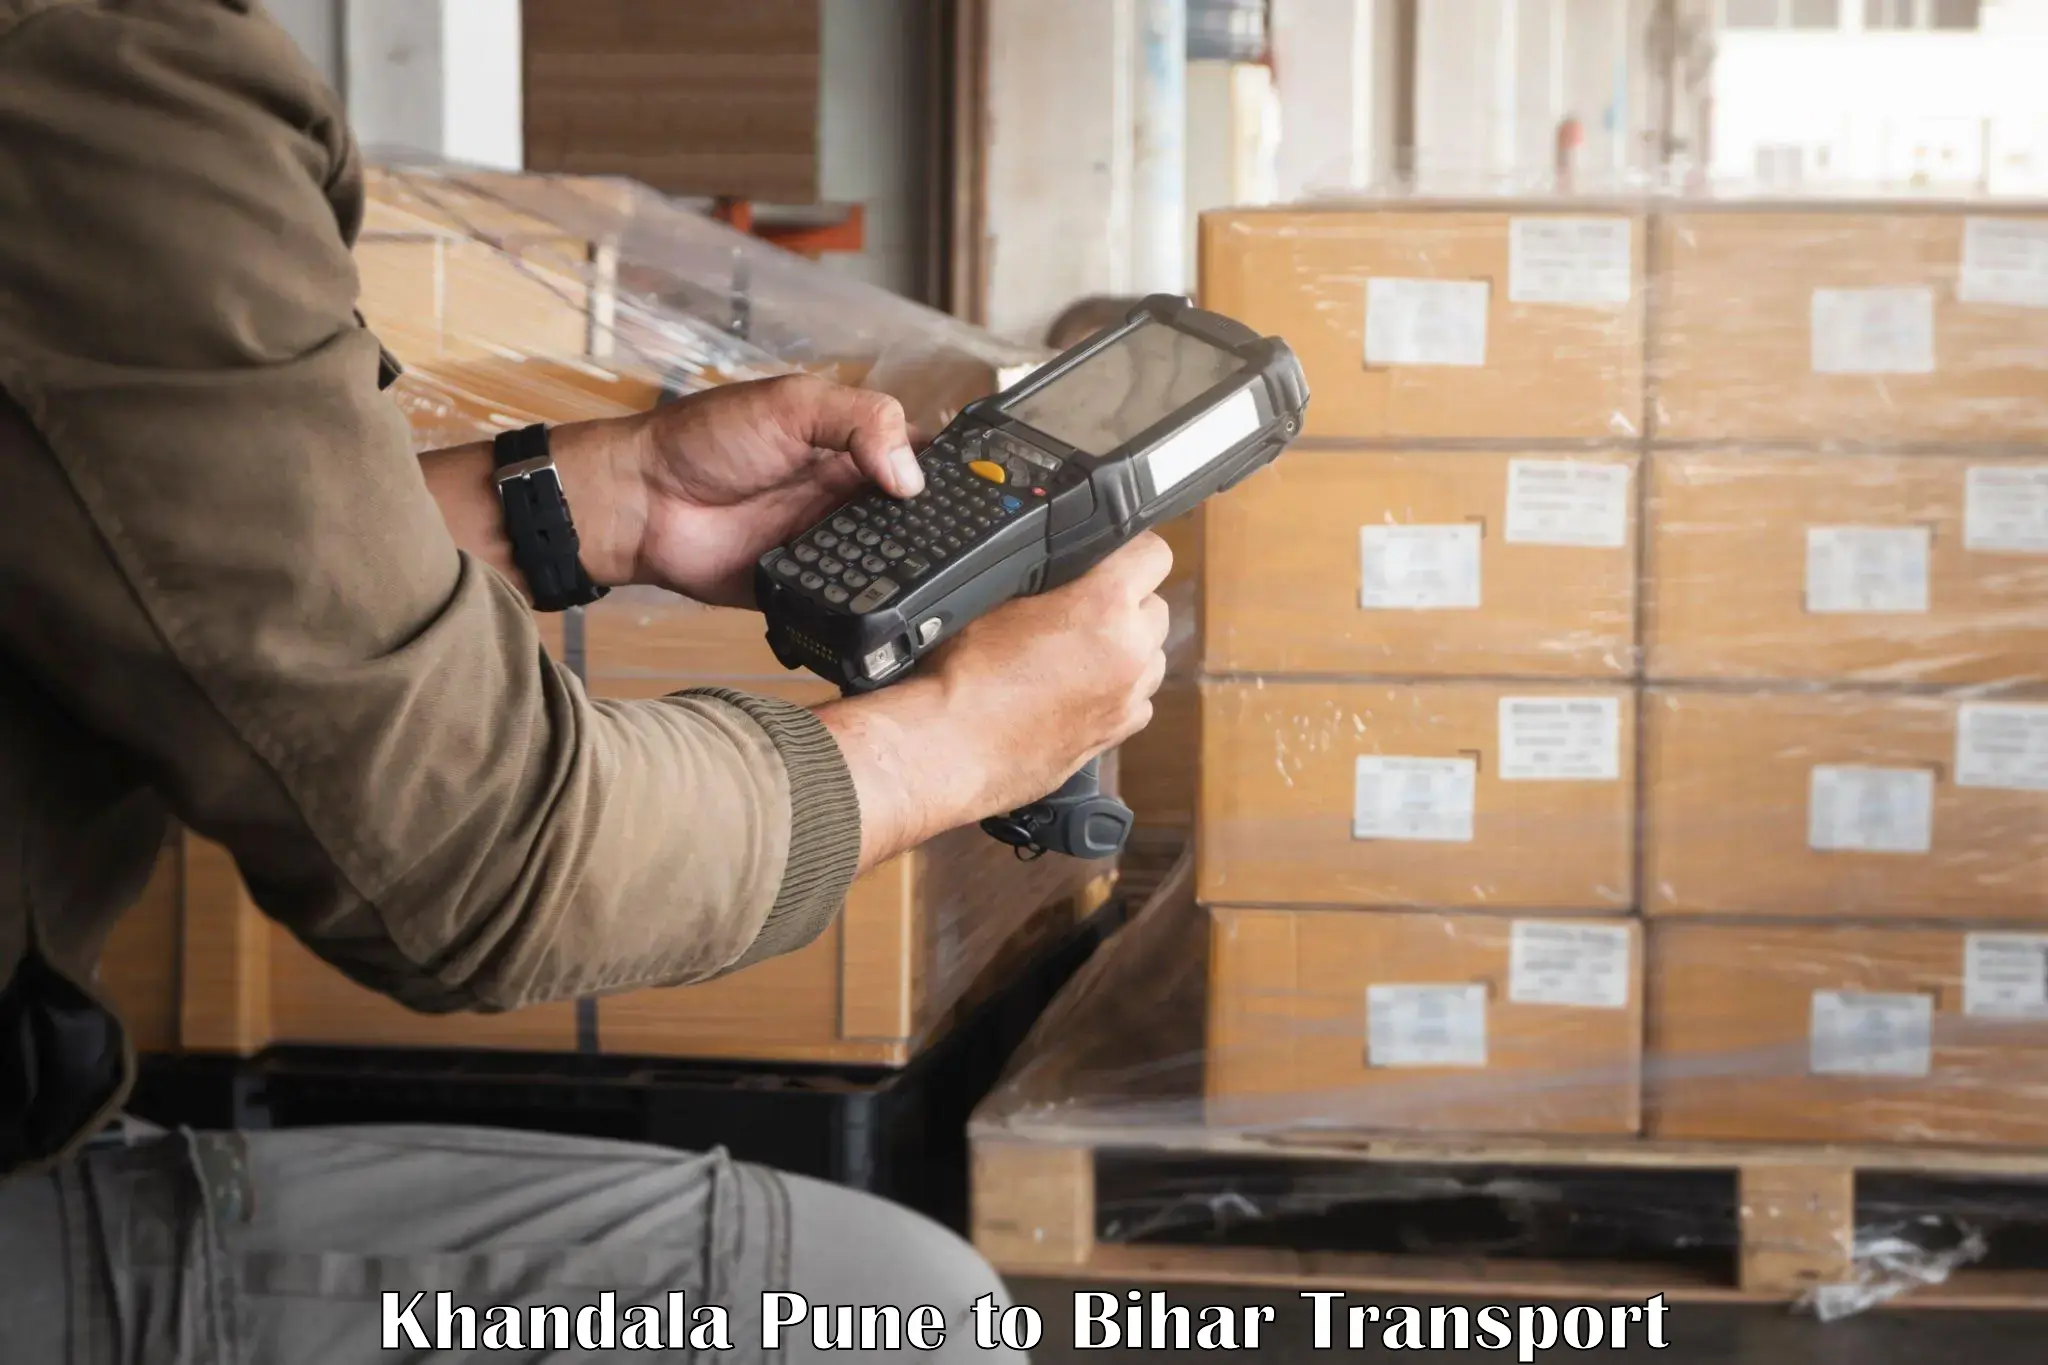 Part load transport service in India Khandala Pune to Bihar